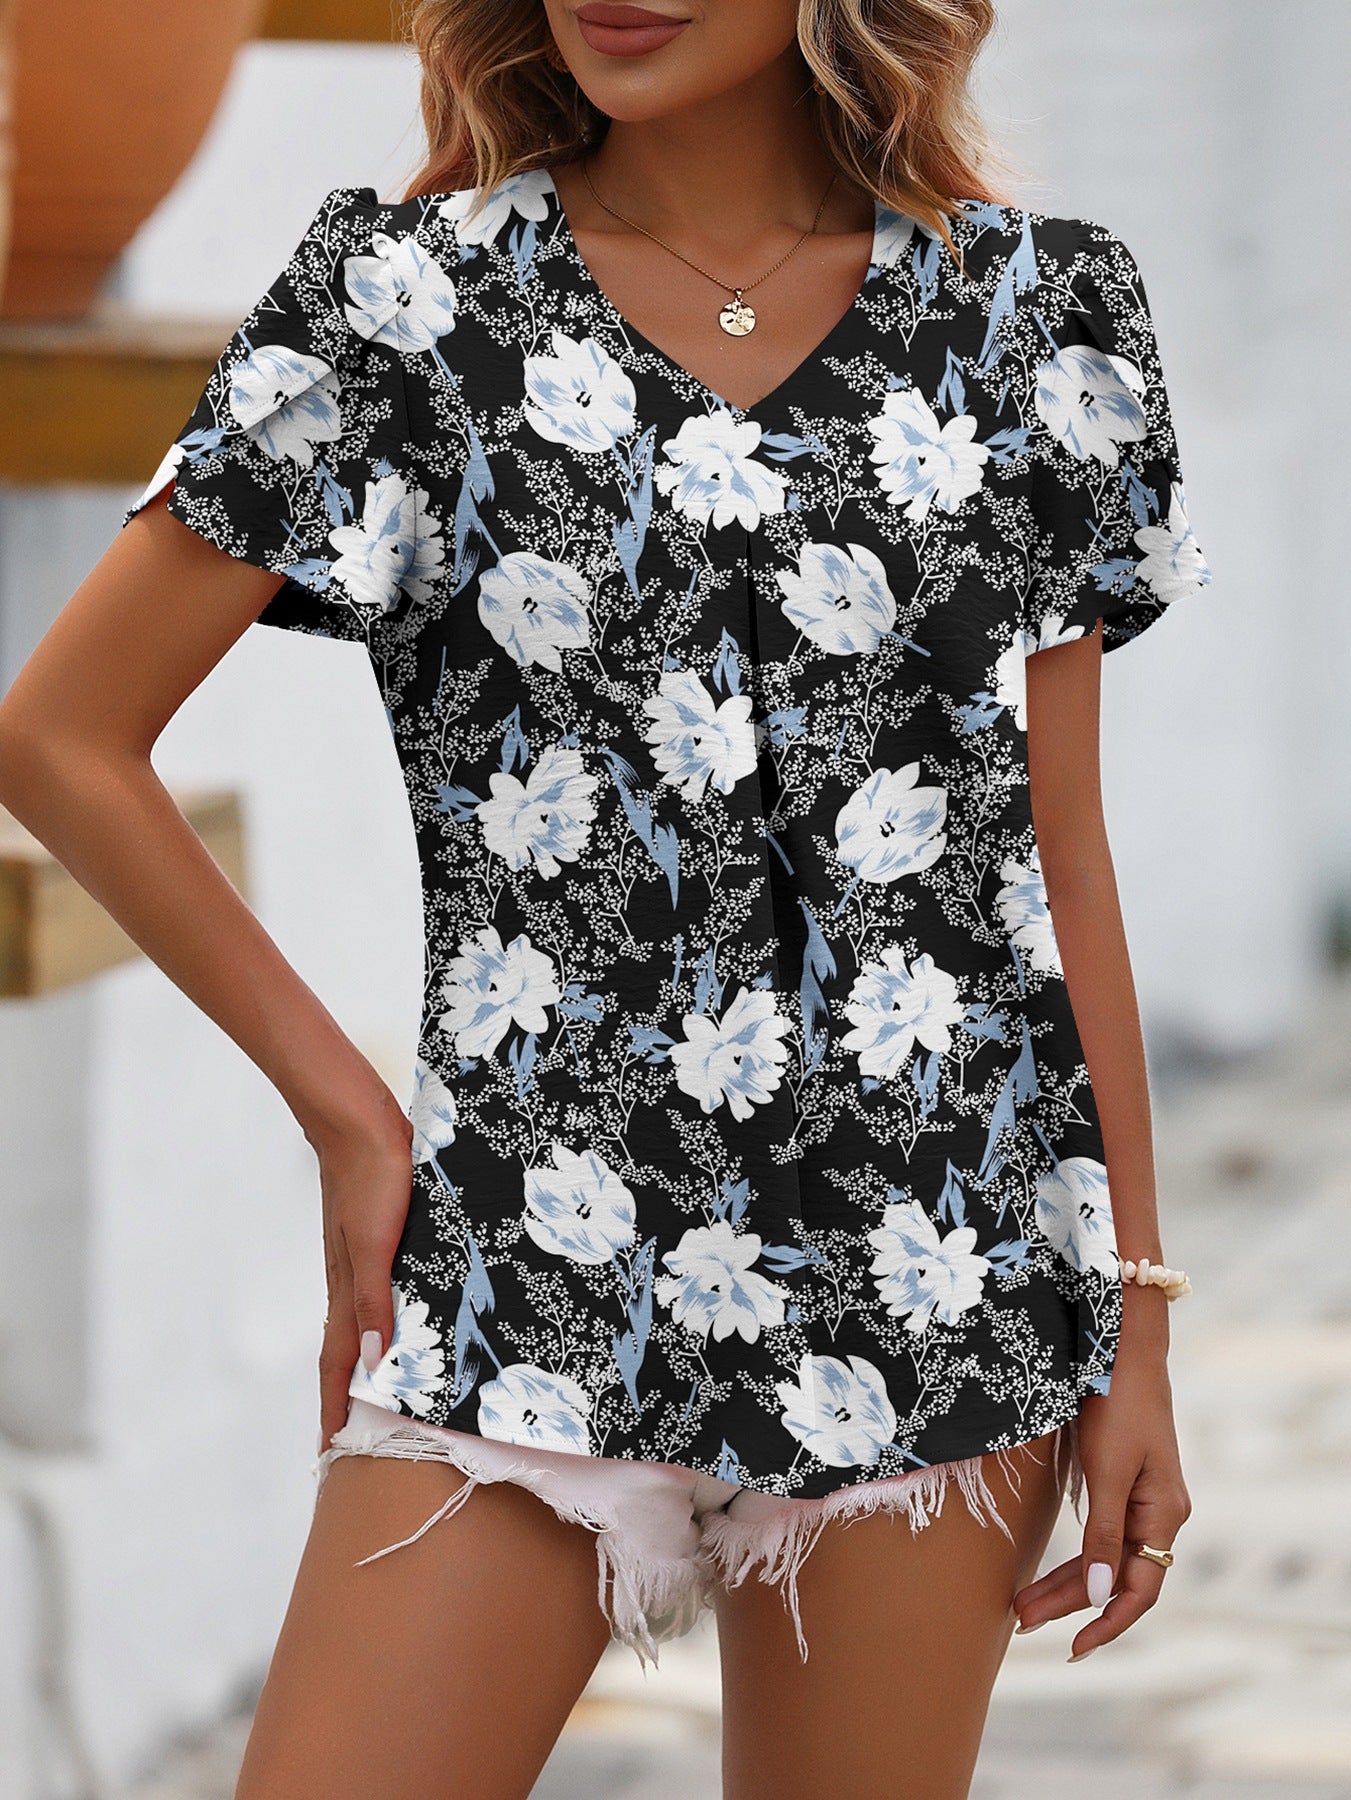 Summer Women Clothing Casual V neck Chiffon Shirt Floral Bud Sleeve Top